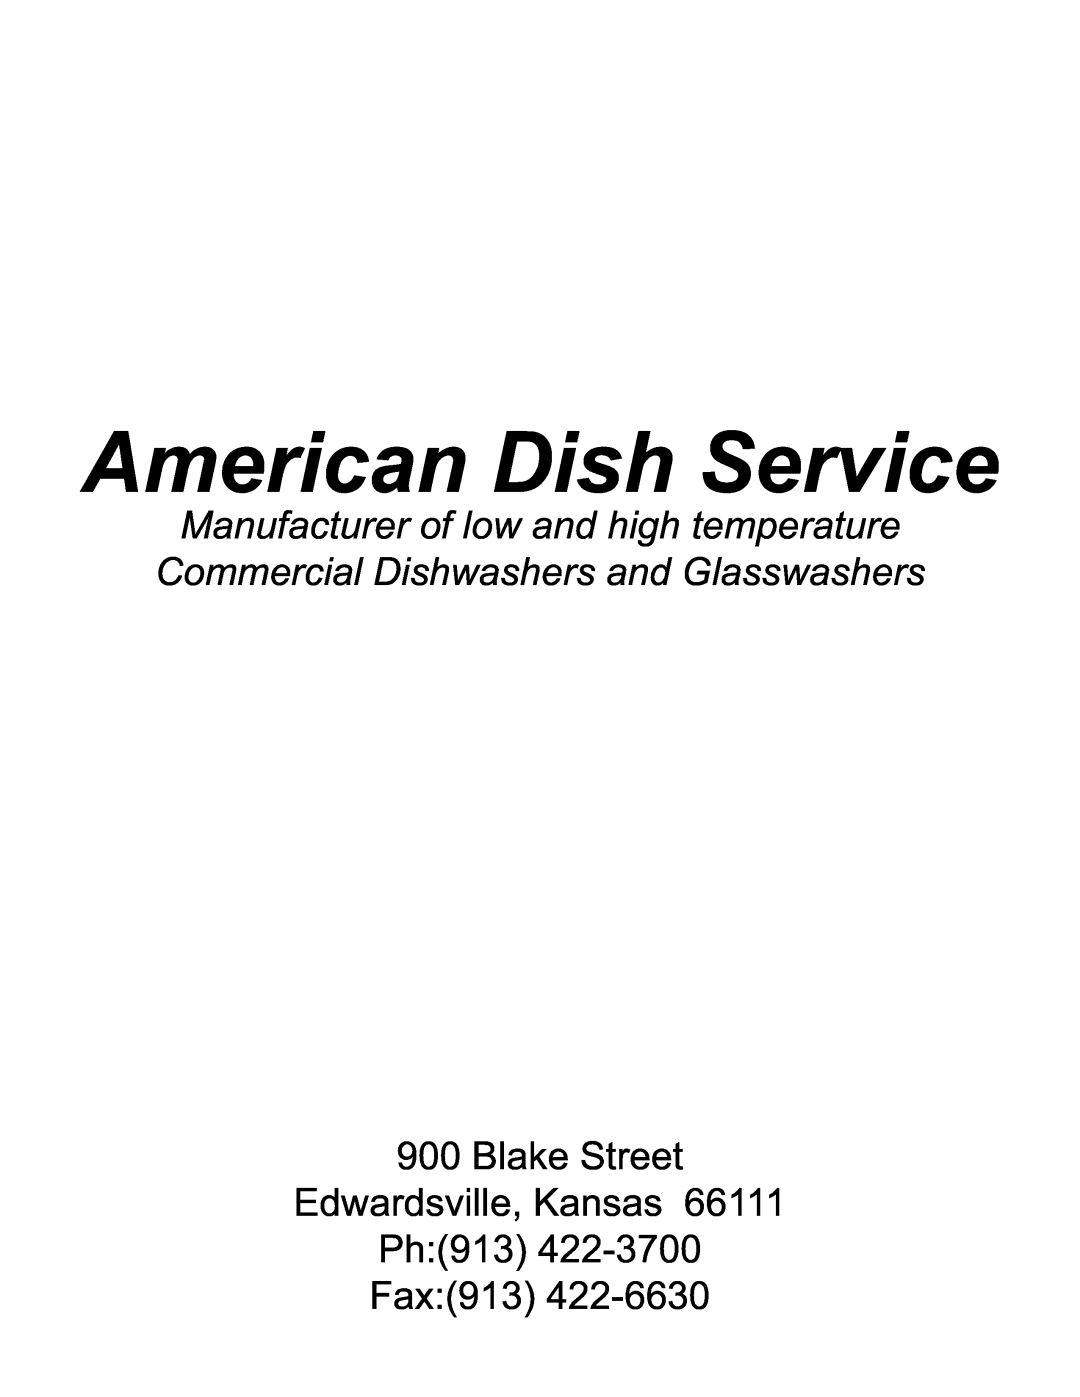 American Dish Service 5-CD LF/RF manual American Dish Service, Blake Street Edwardsville, Kansas Ph, Fax 